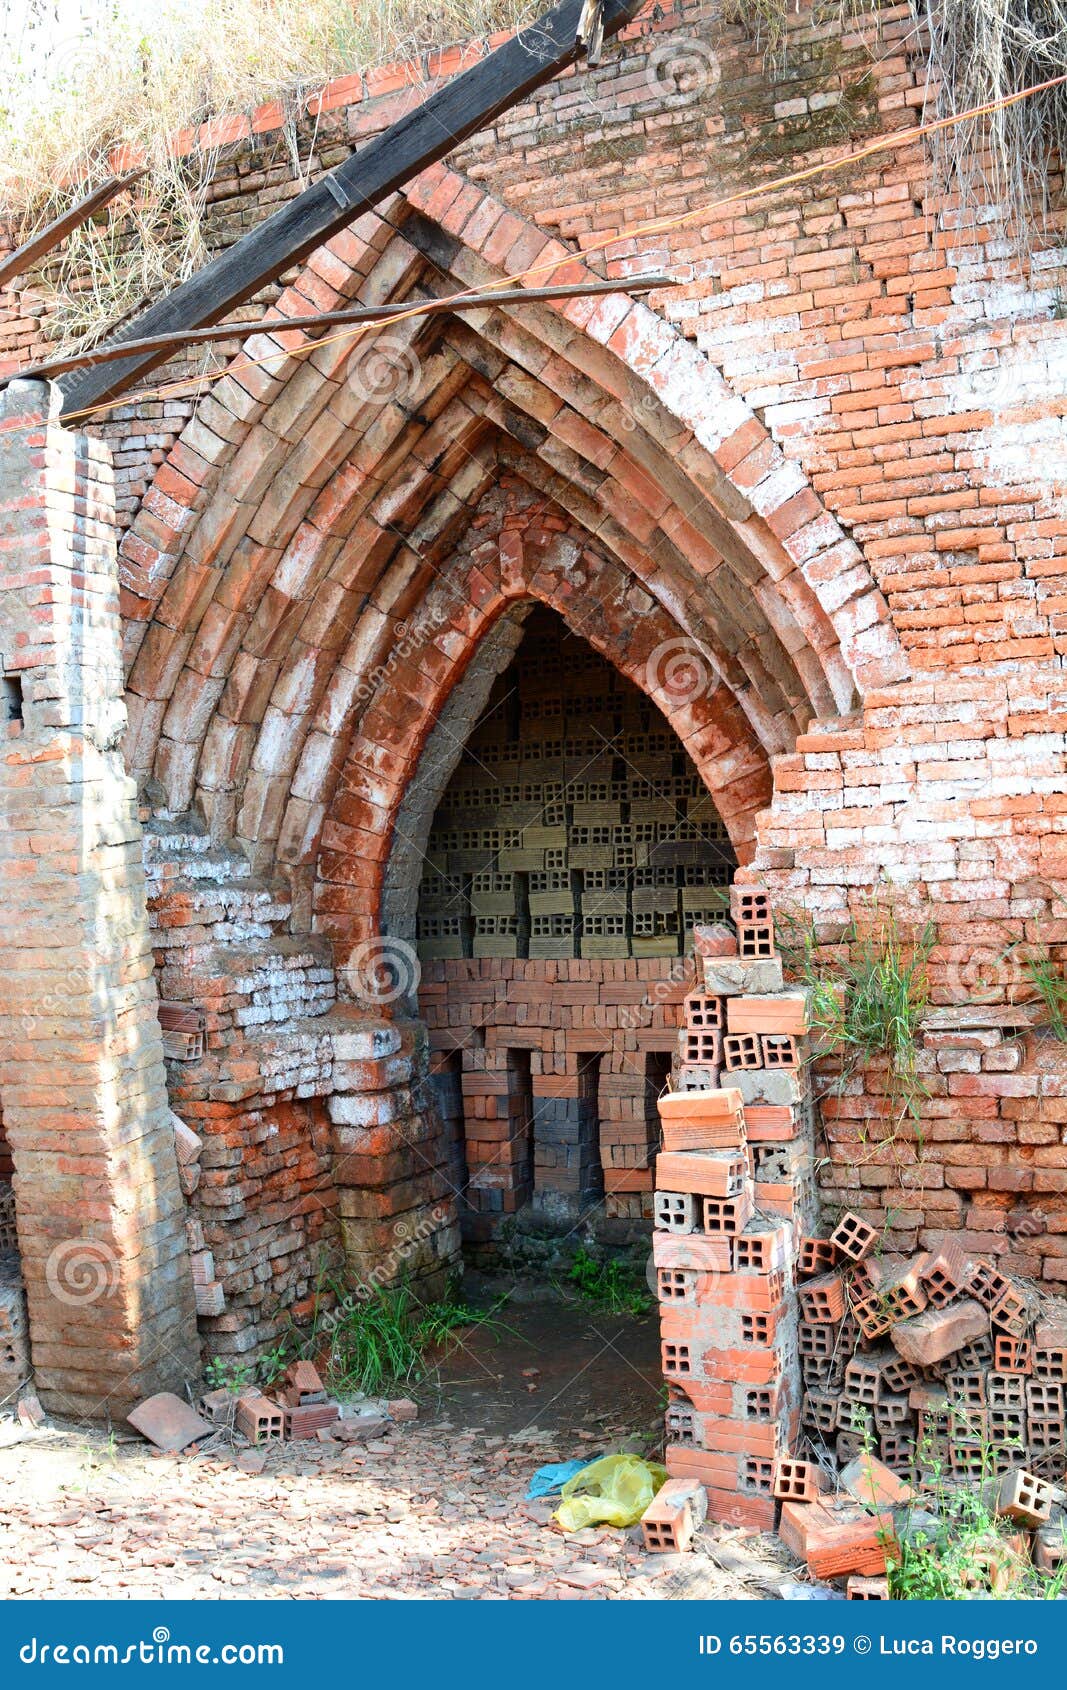 furnace in brick factory. ben tre. mekong delta region. vietnam